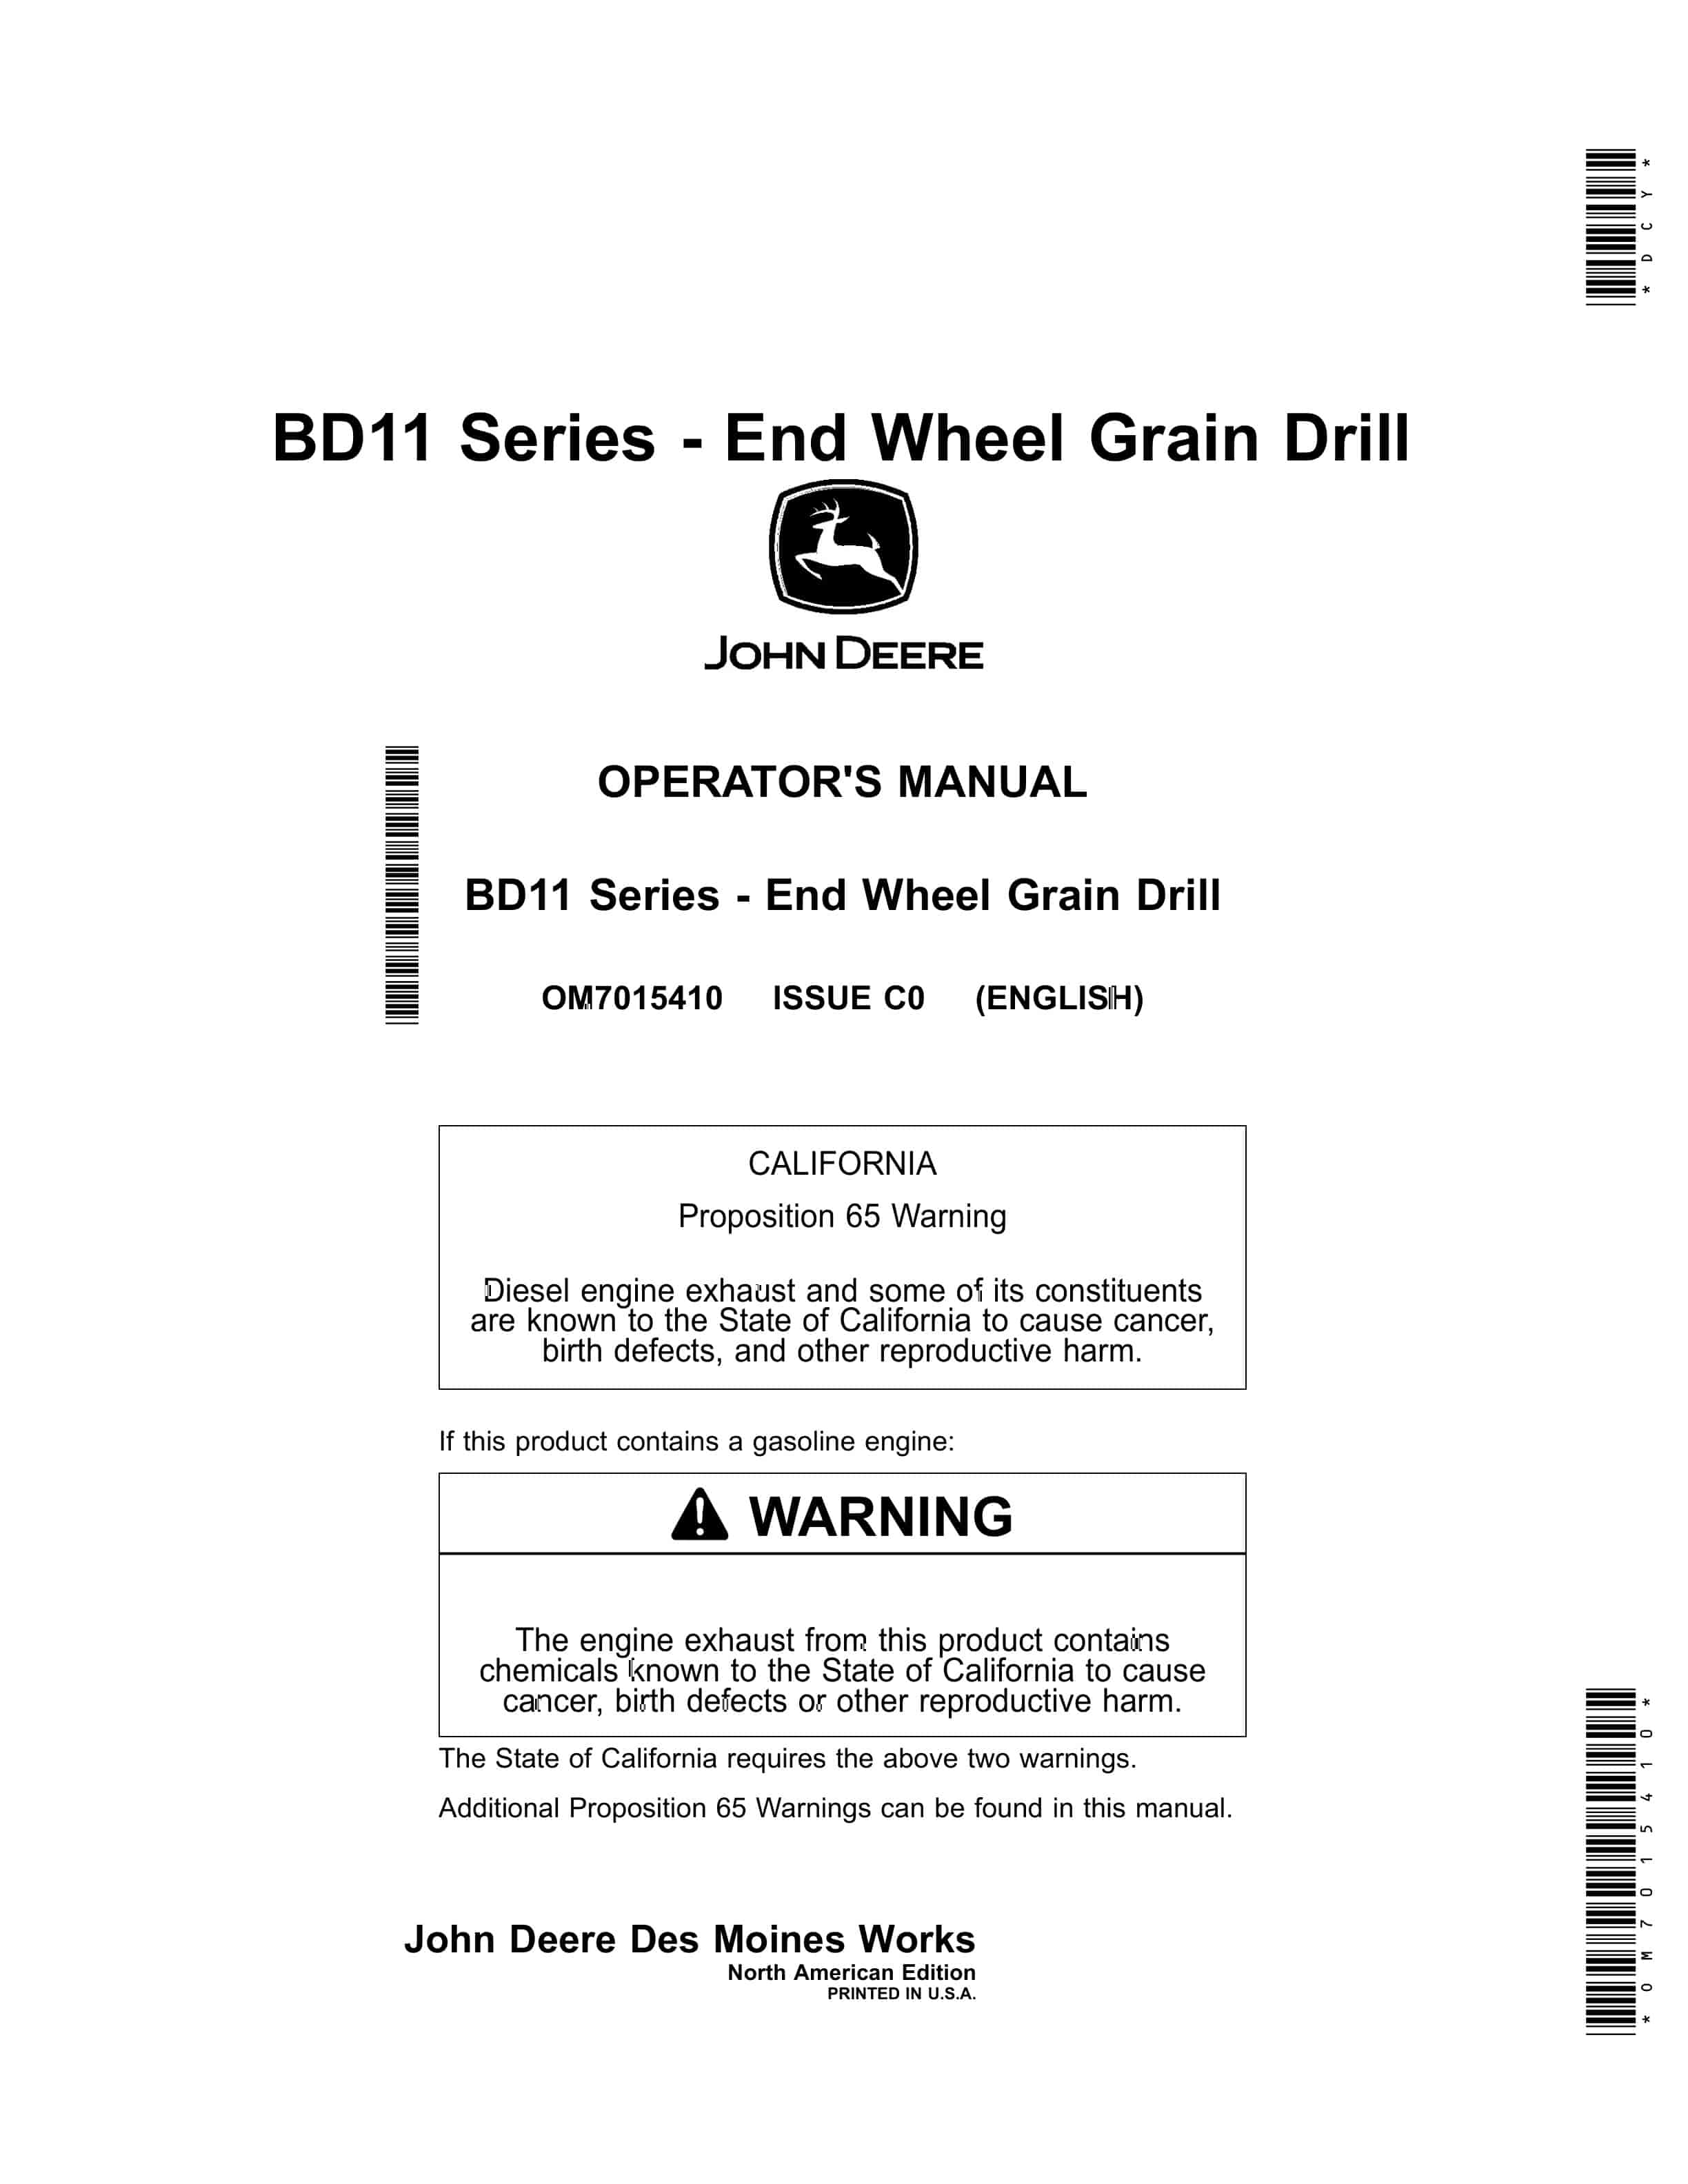 John Deere BD11 Series End Wheel Grain Drill Operator Manual OM7015410 1